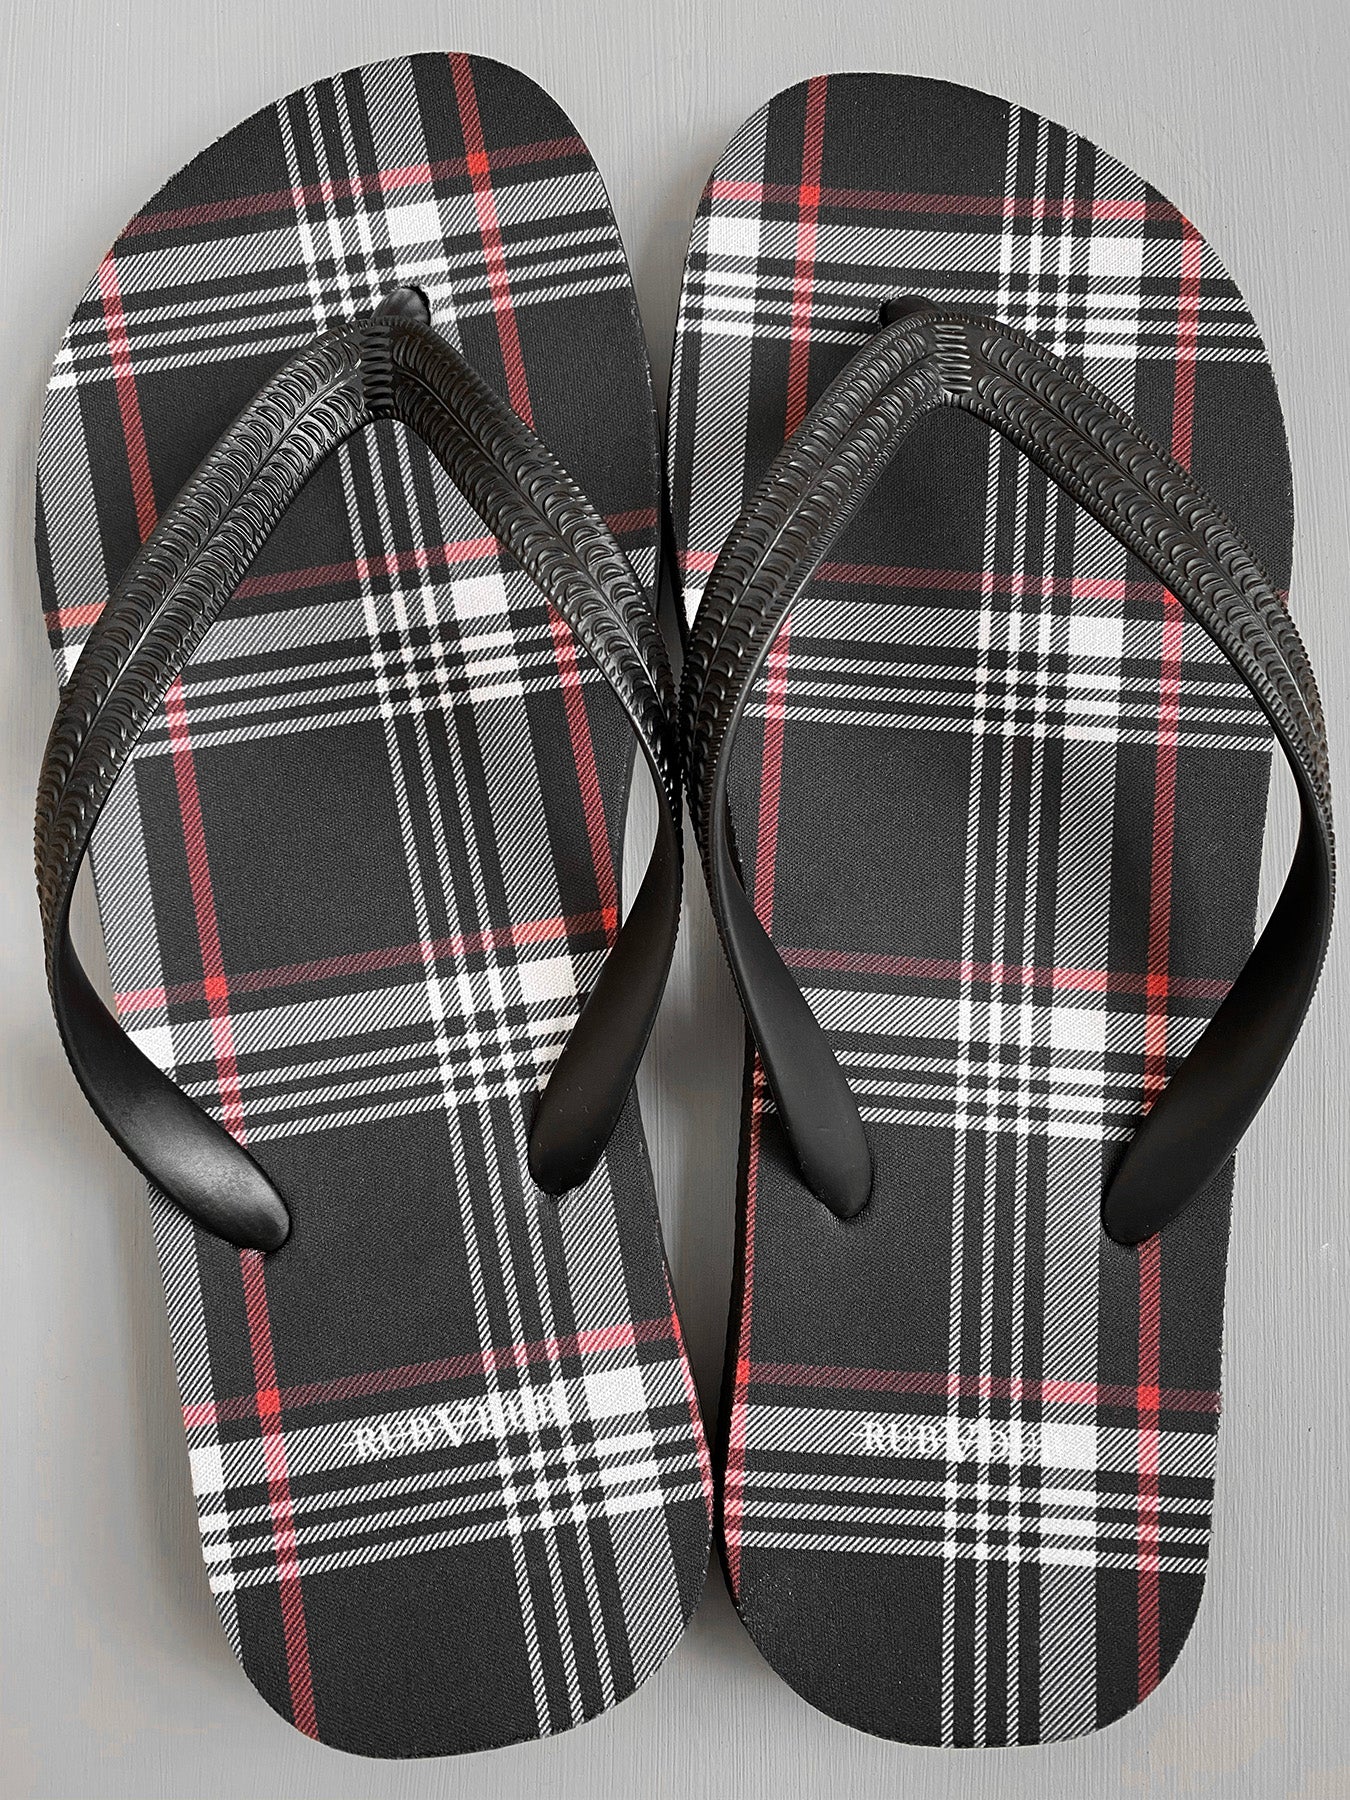 rubadub flip flop sandals